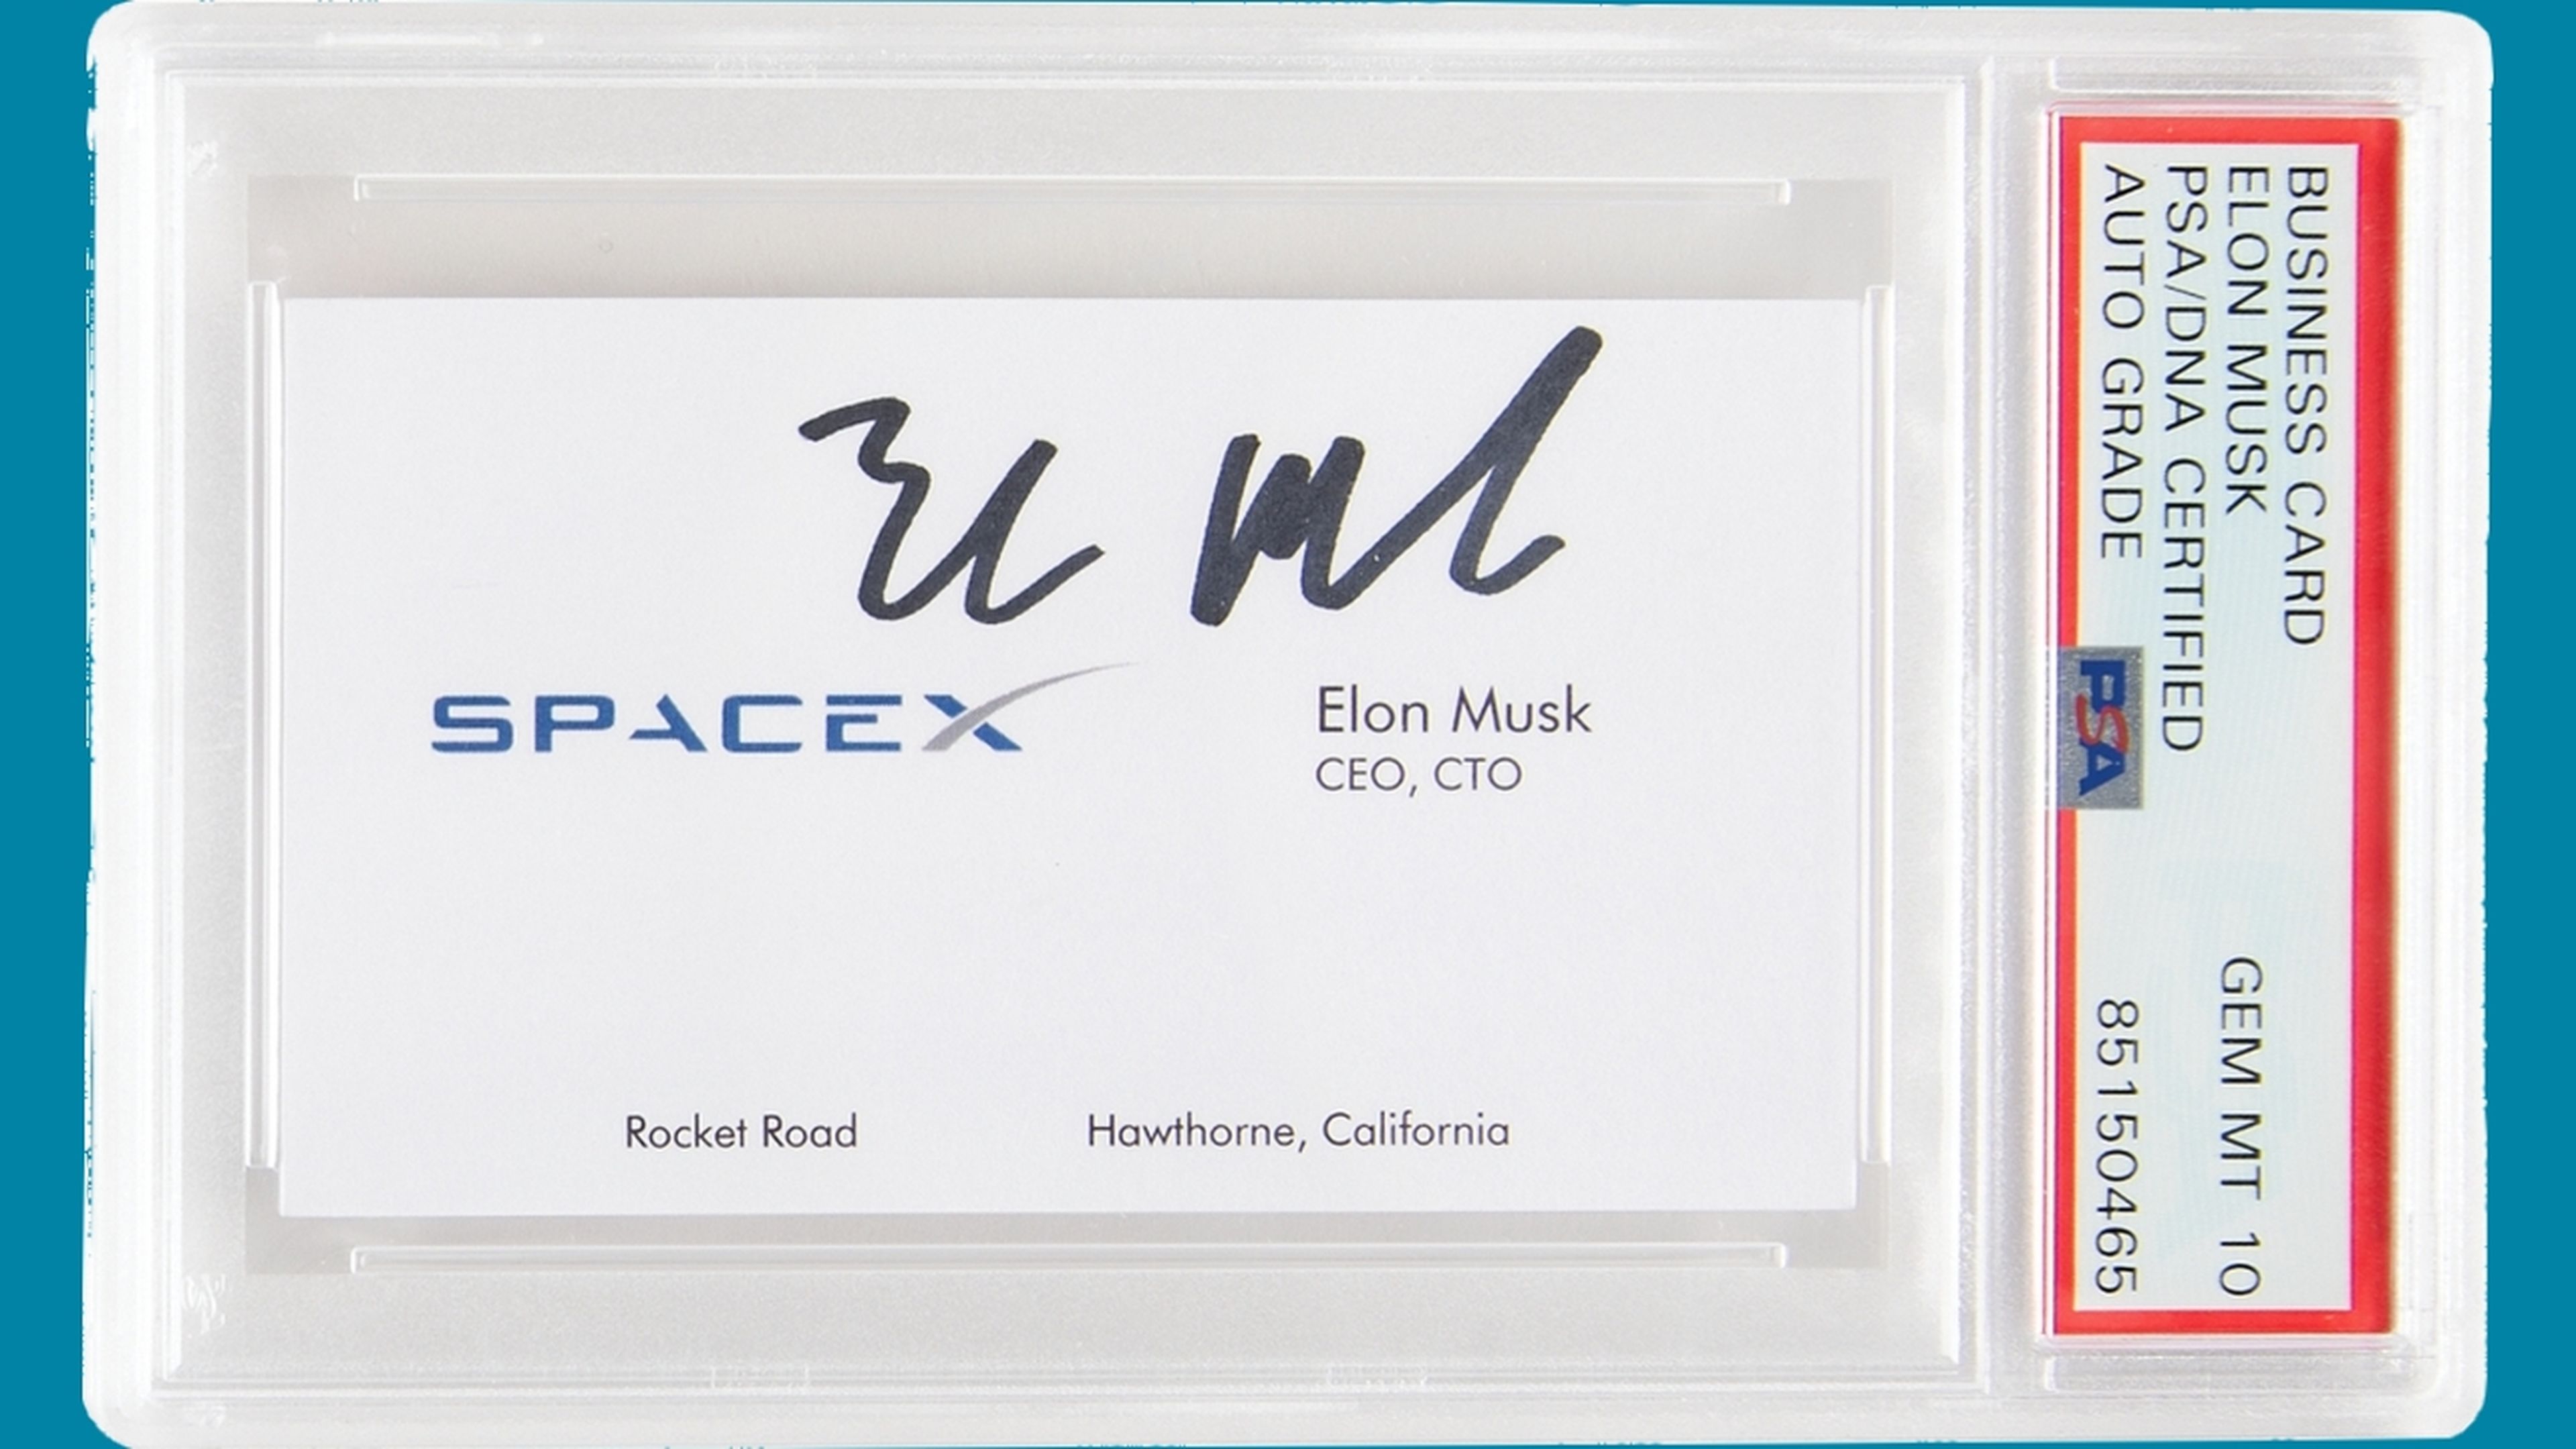 Tarjeta de visita Elon Musk